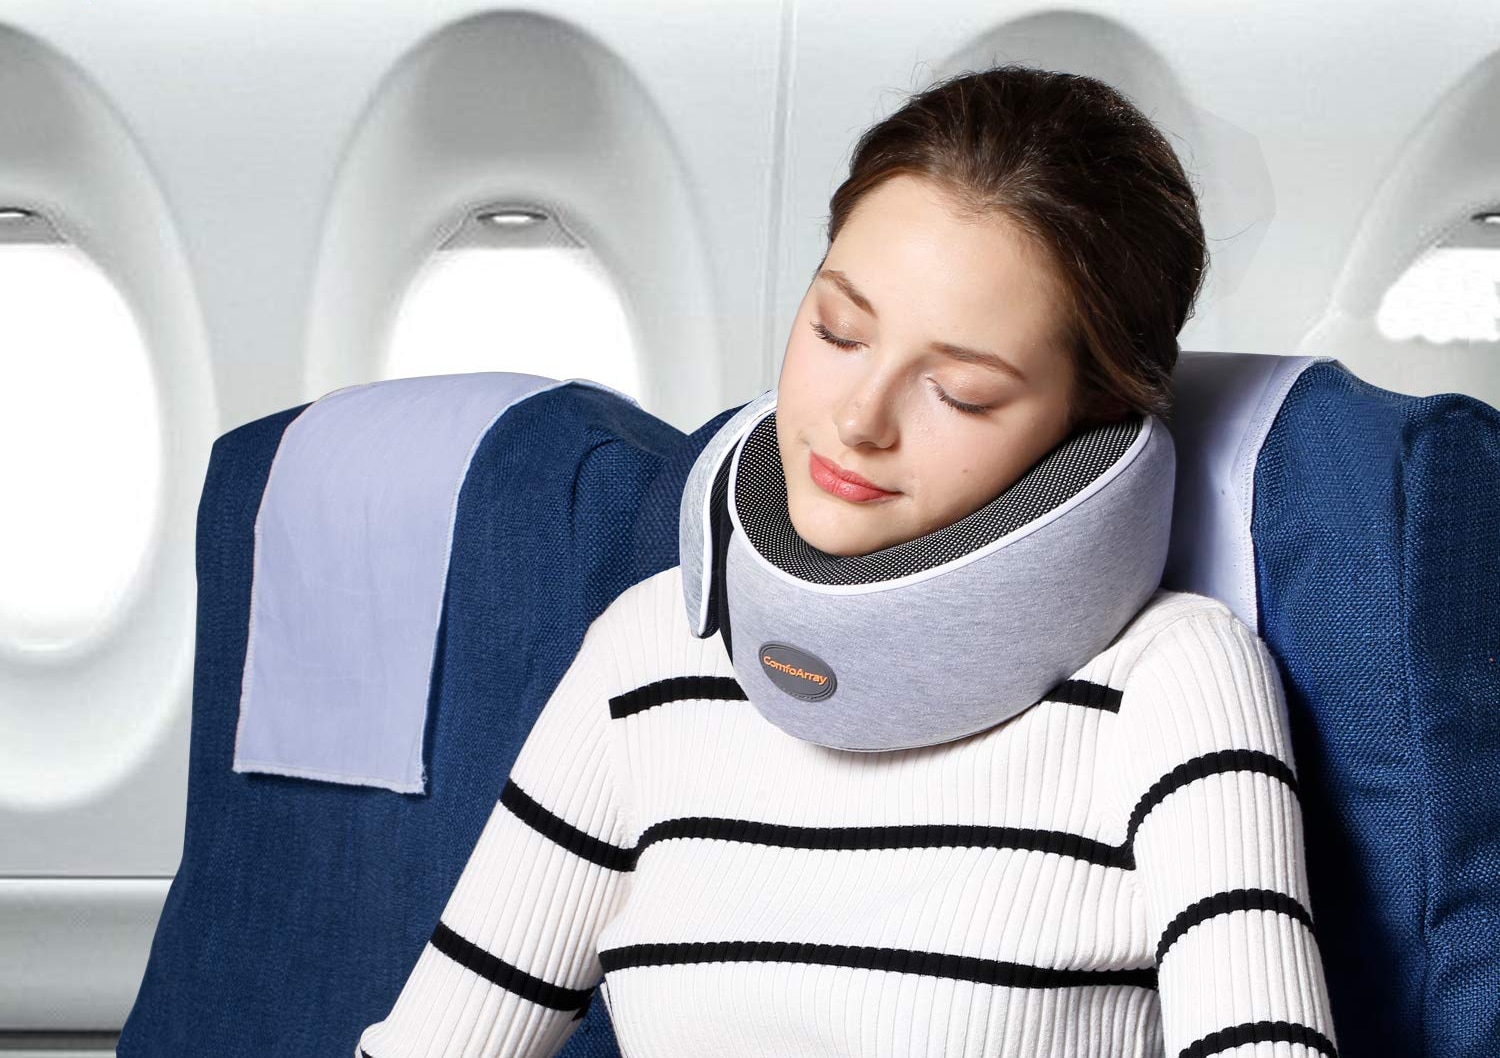 smartpac comfort plus travel pillow review